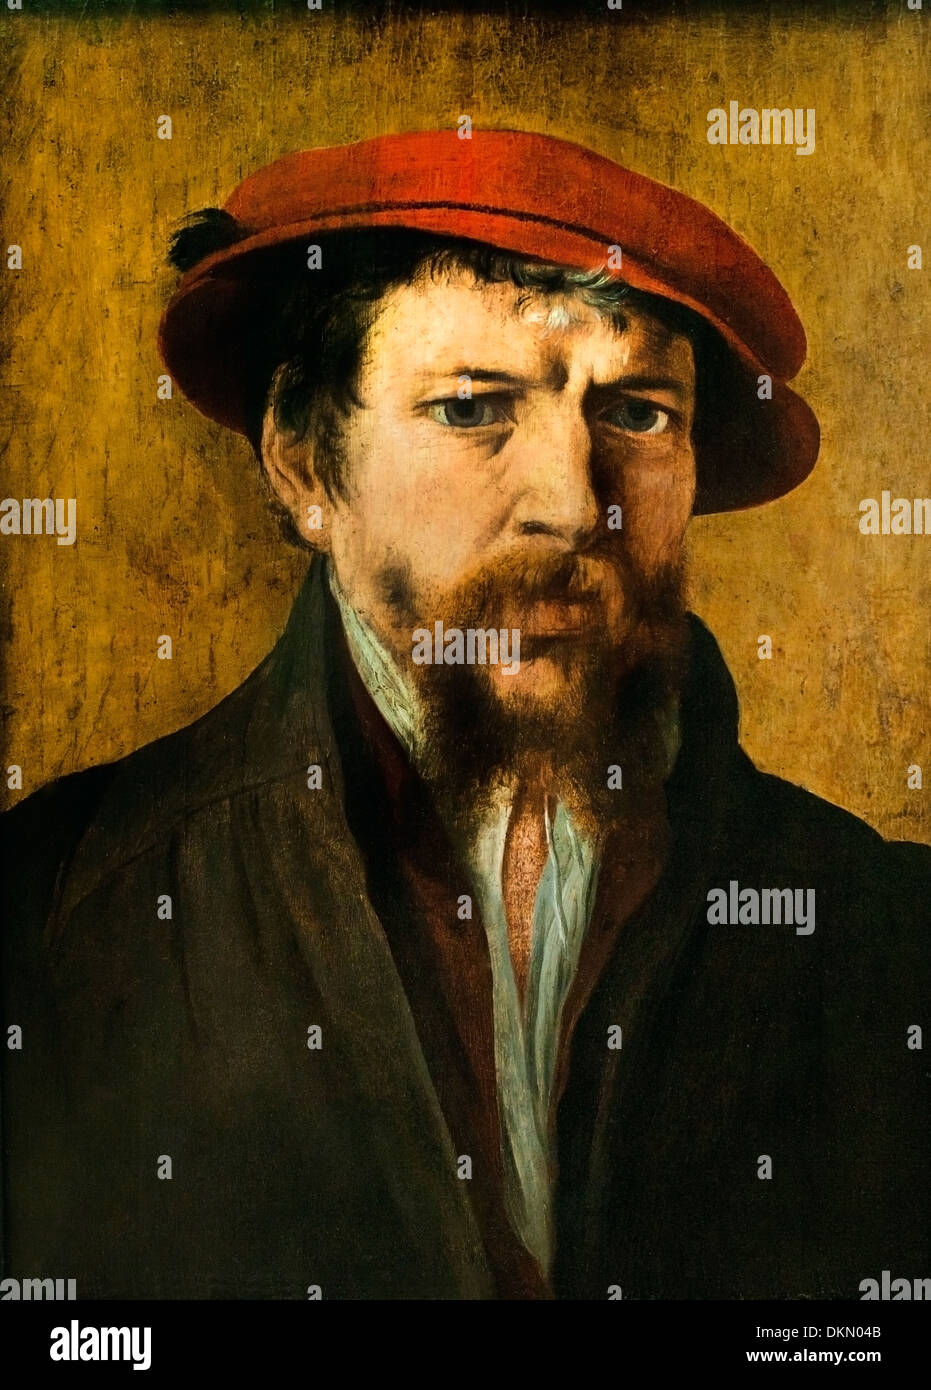 Mann mit roter Mütze - Hombre con tapa roja Frans Floris (1519/1520-1570) Bélgica Bélgica Foto de stock